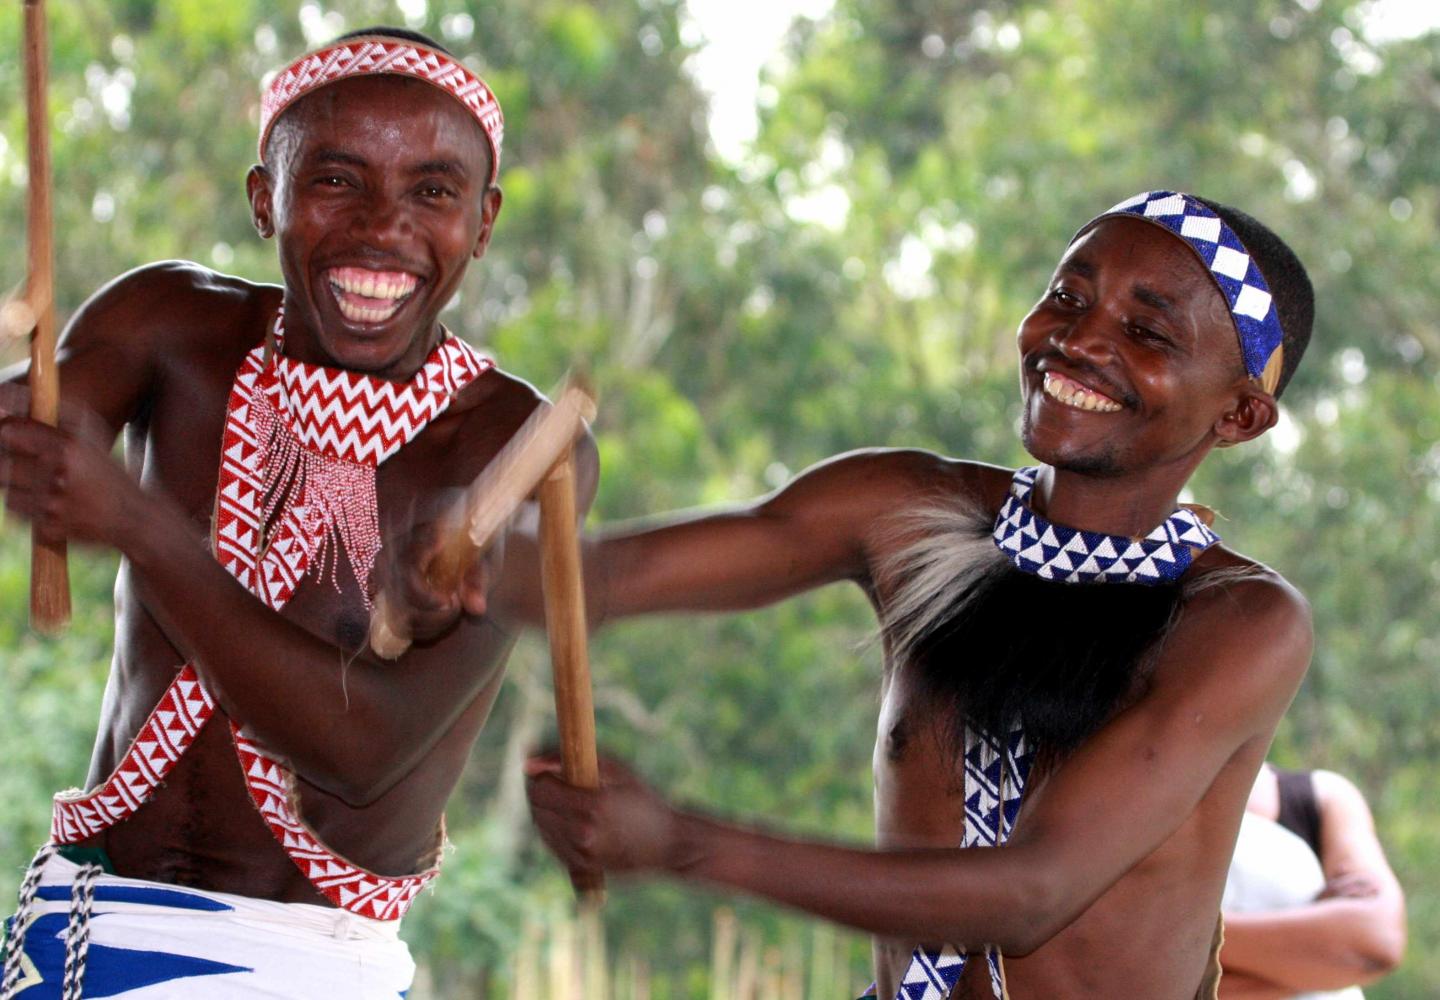 Urugangazi group (Rwanda Intores dancers)